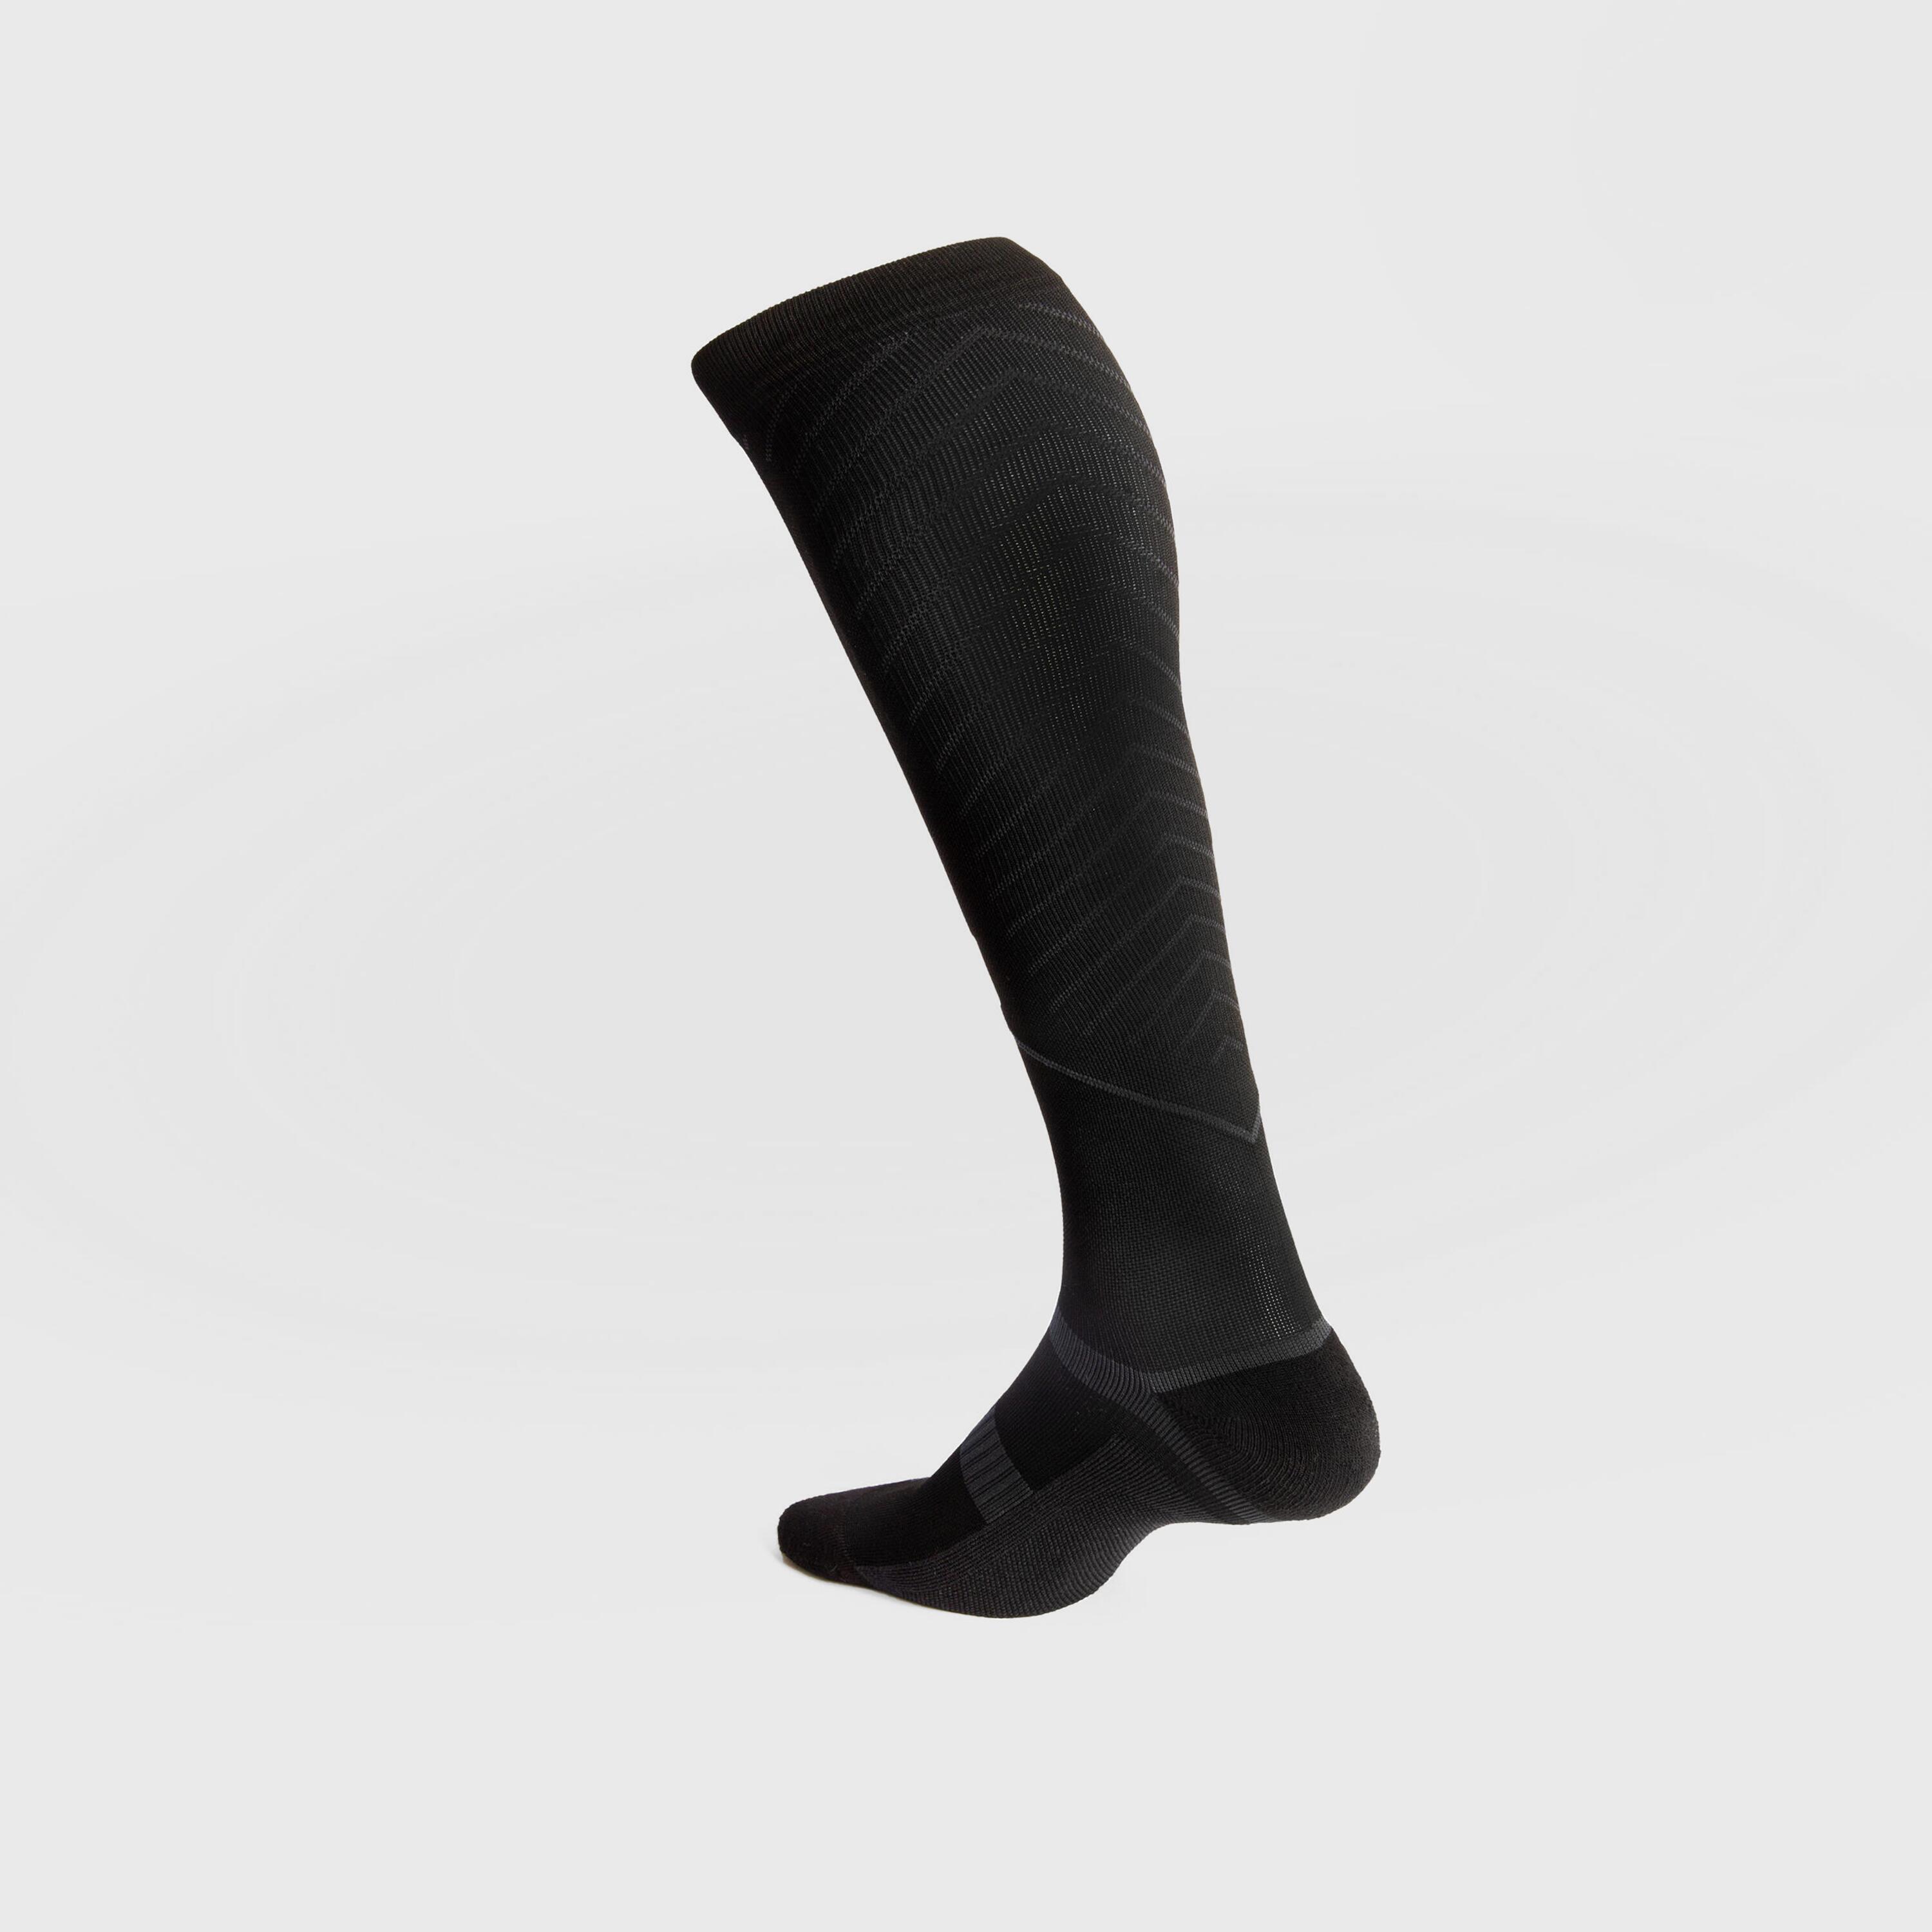 Compression socks - Black - Decathlon - Decathlon